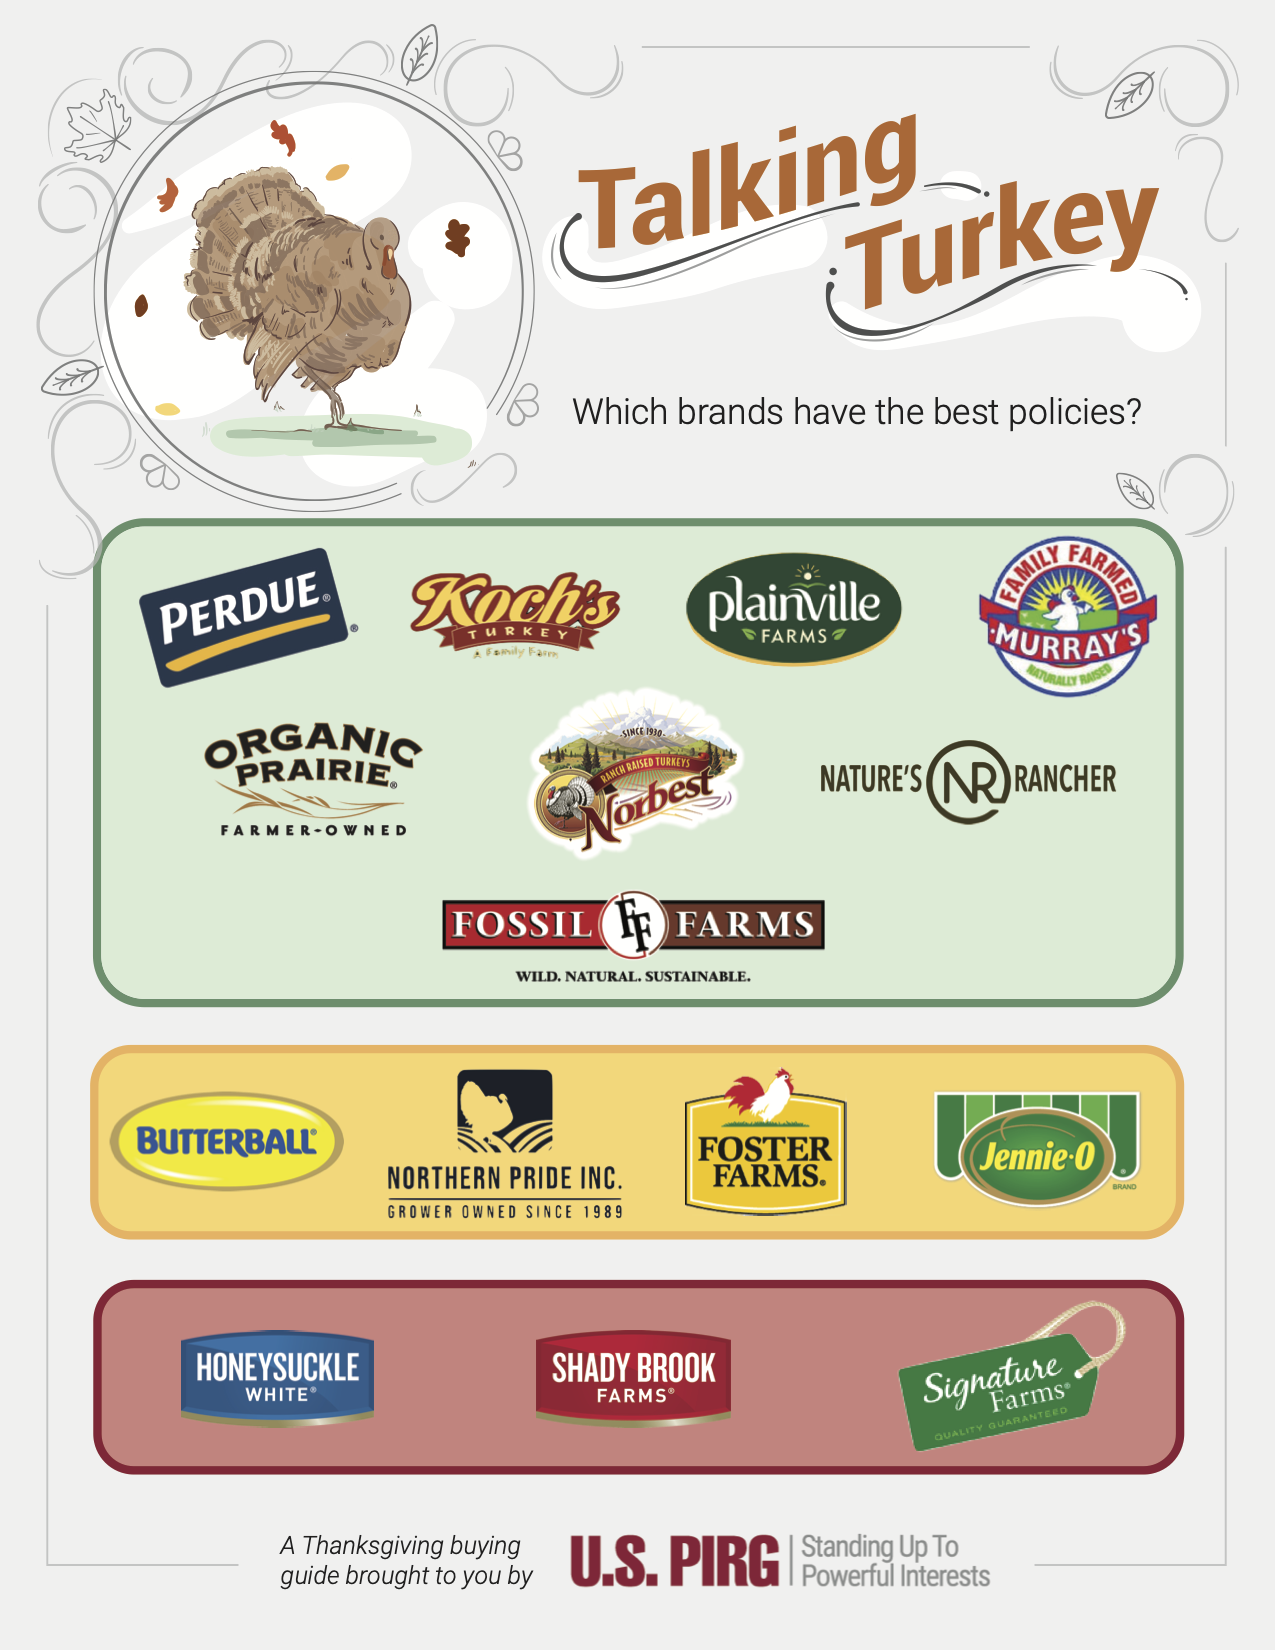 Talking Turkey A Guide To Buying Turkey Raised Without Overusing Antibiotics U S Pirg